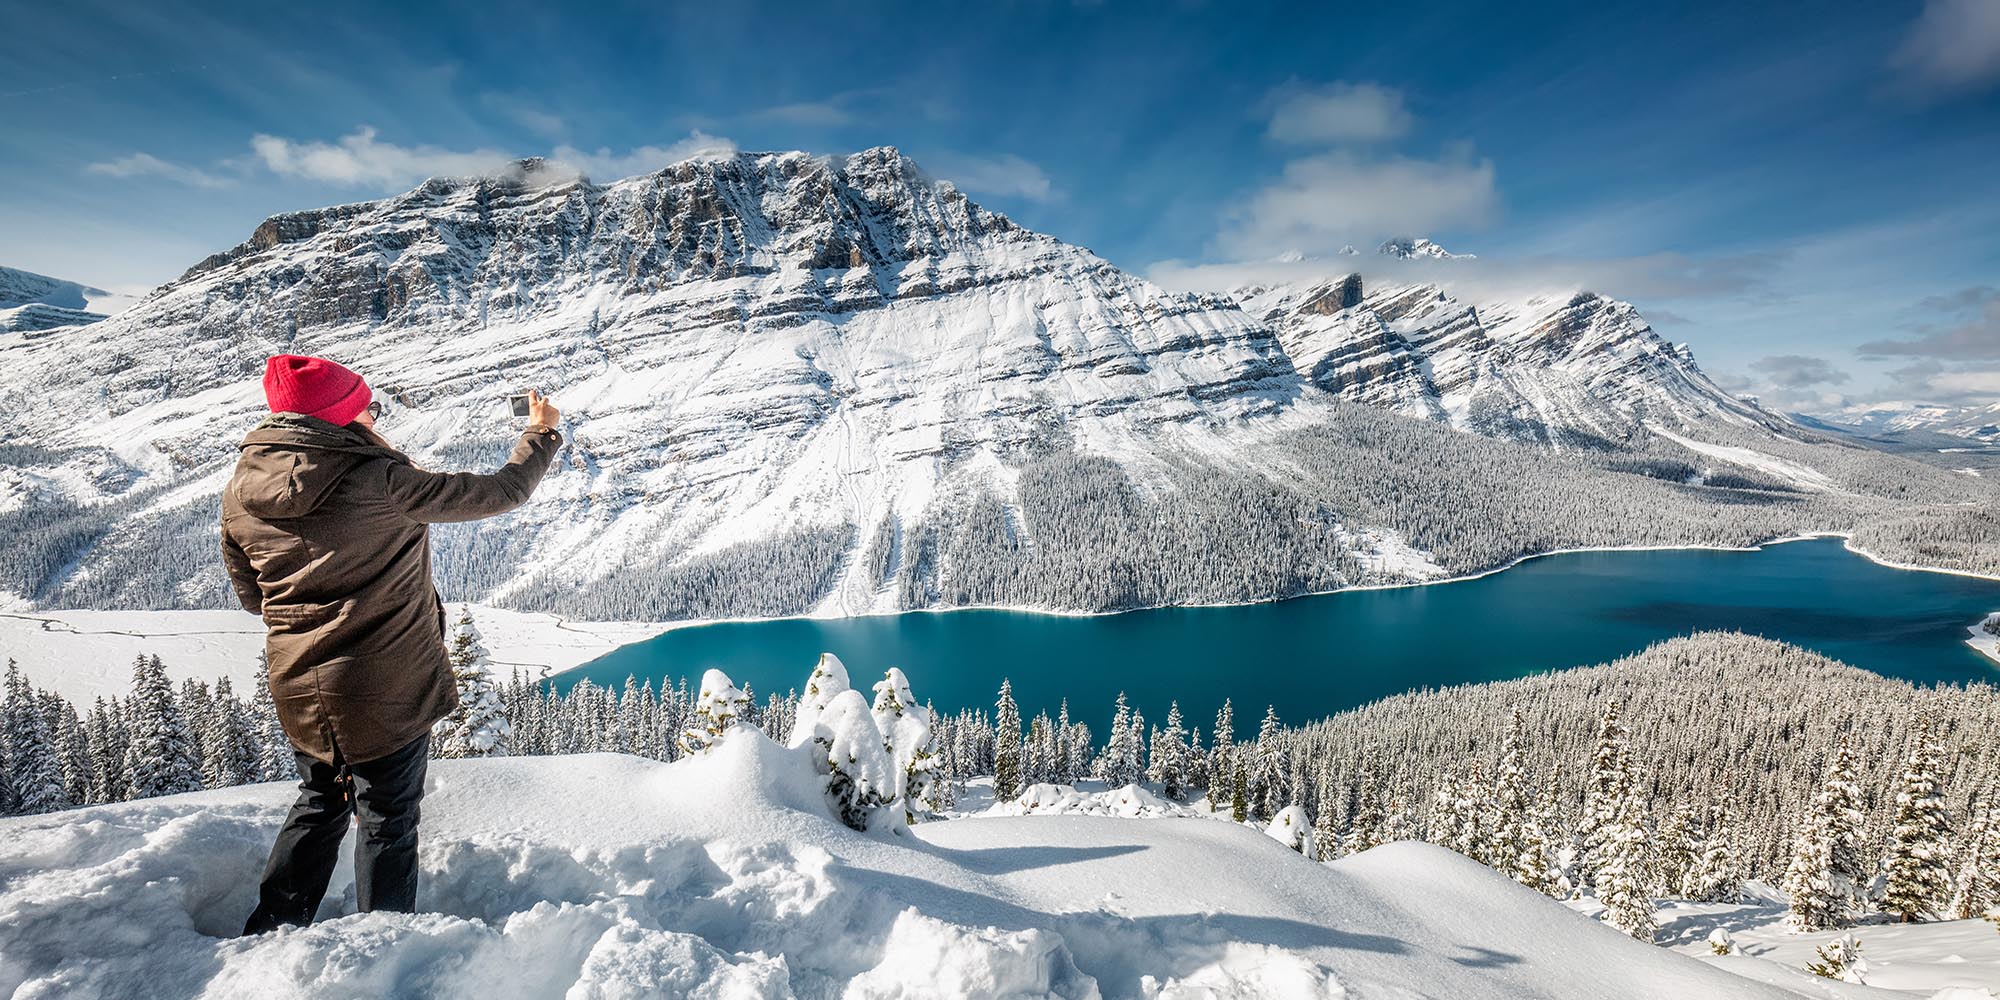 Winter Wonderland: Exploring the Canadian Rockies